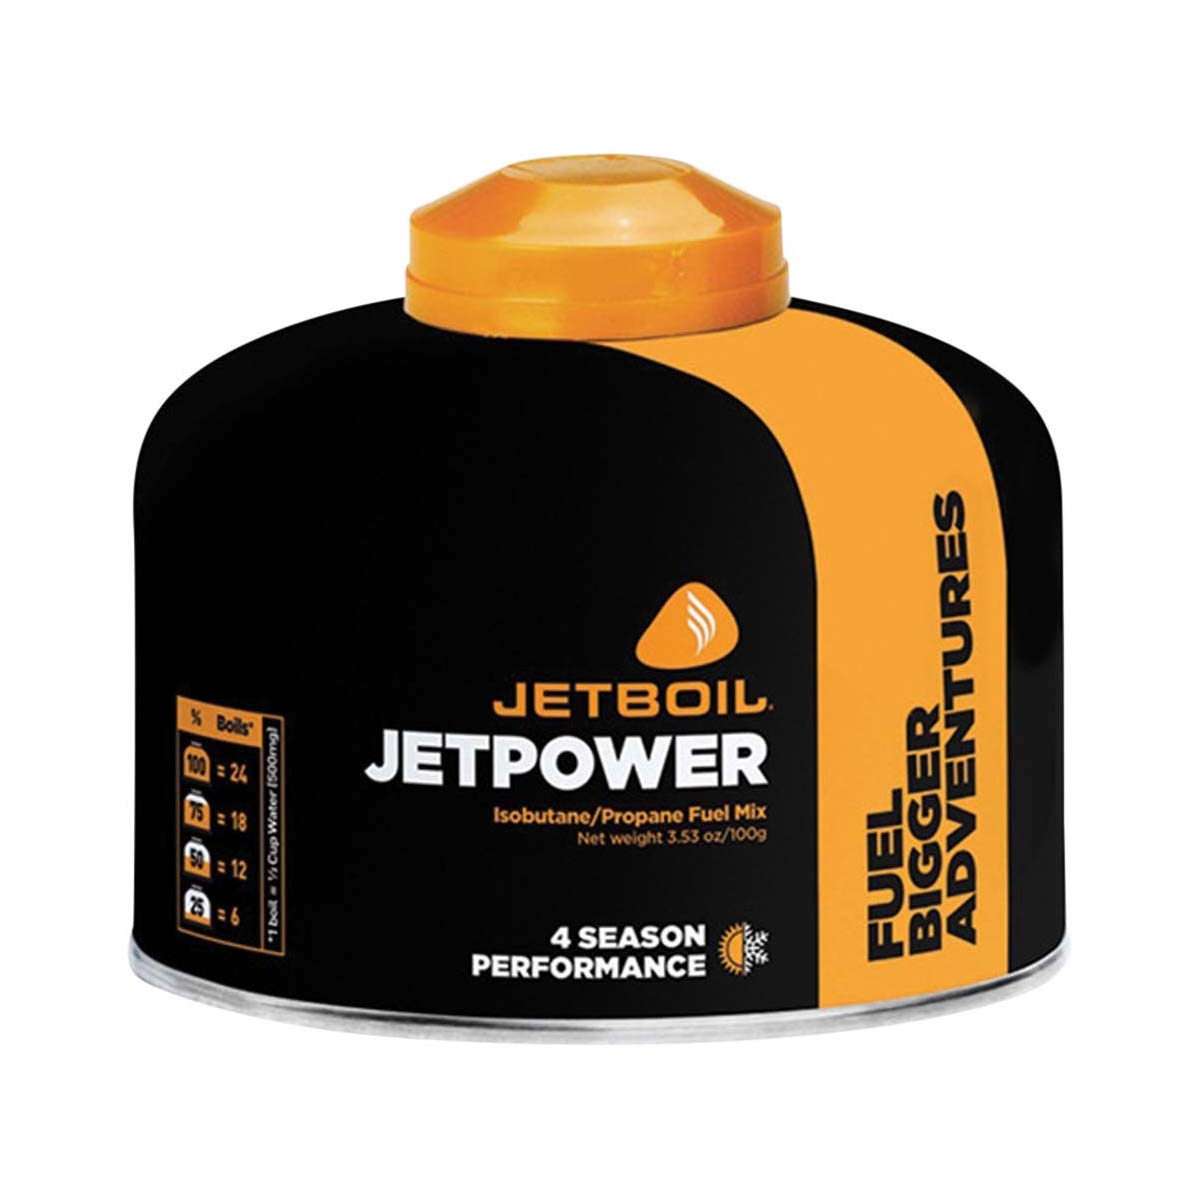 Jetboil Jetpower Fuel 100g